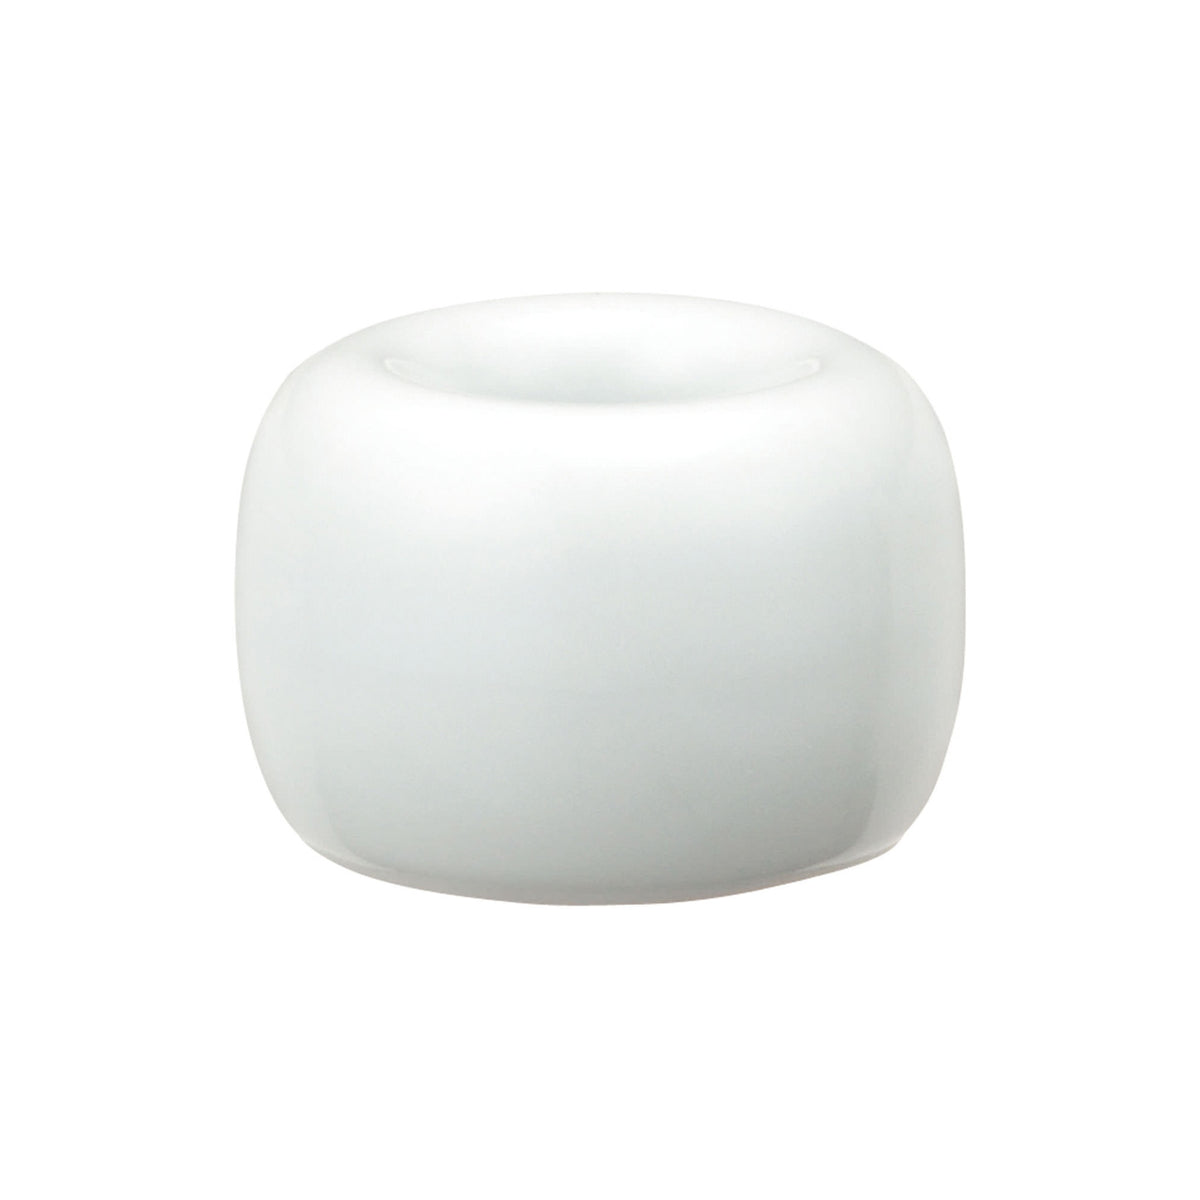 MUJI White Porcelain Tooth Brush Stand - White